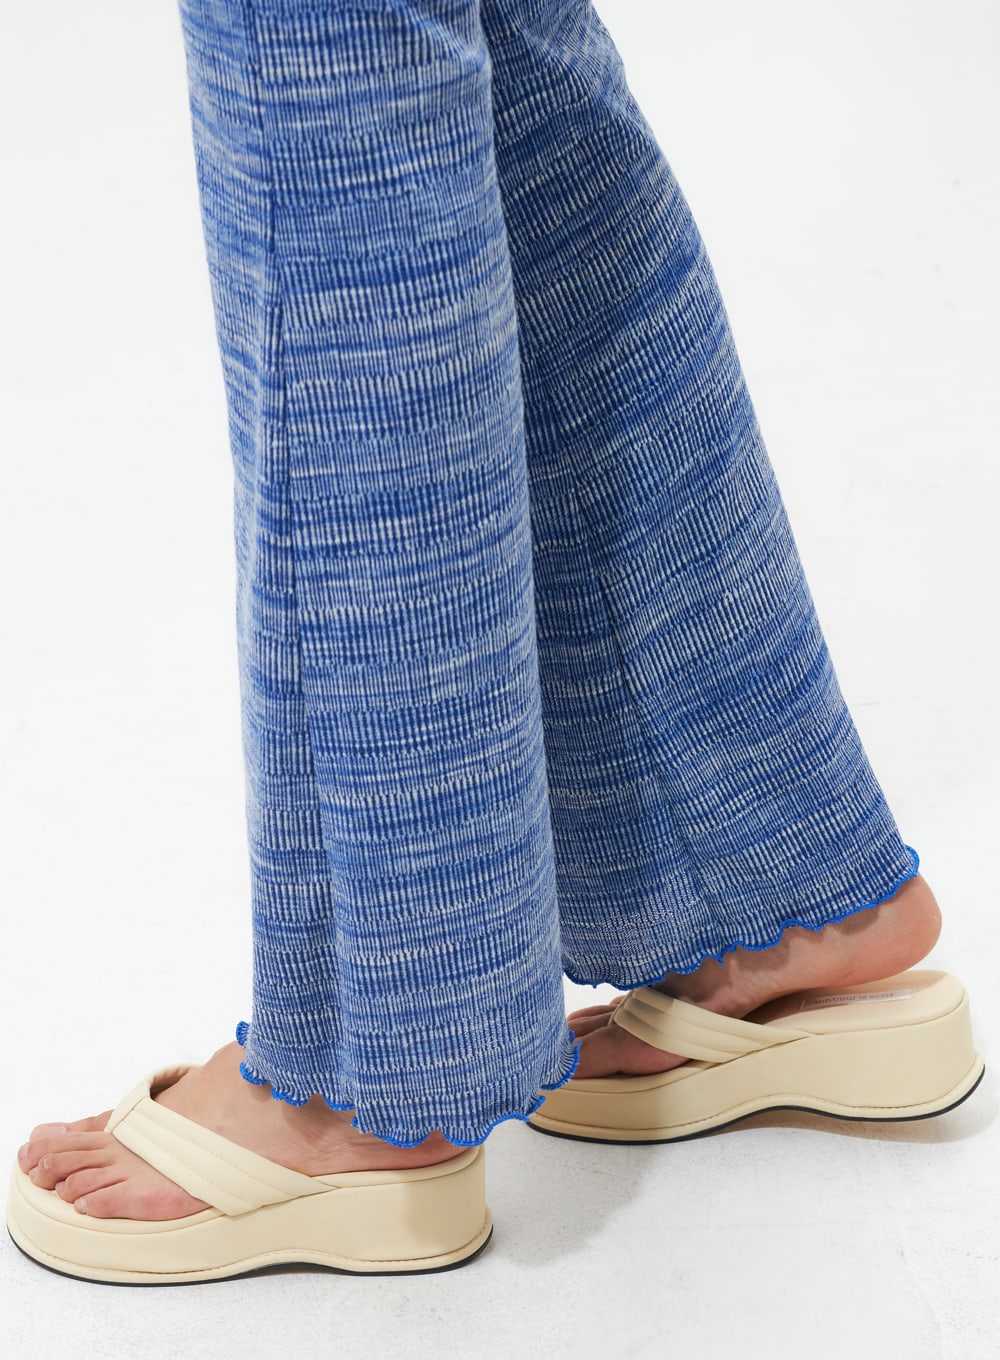 platform-slipper-sandals-il314